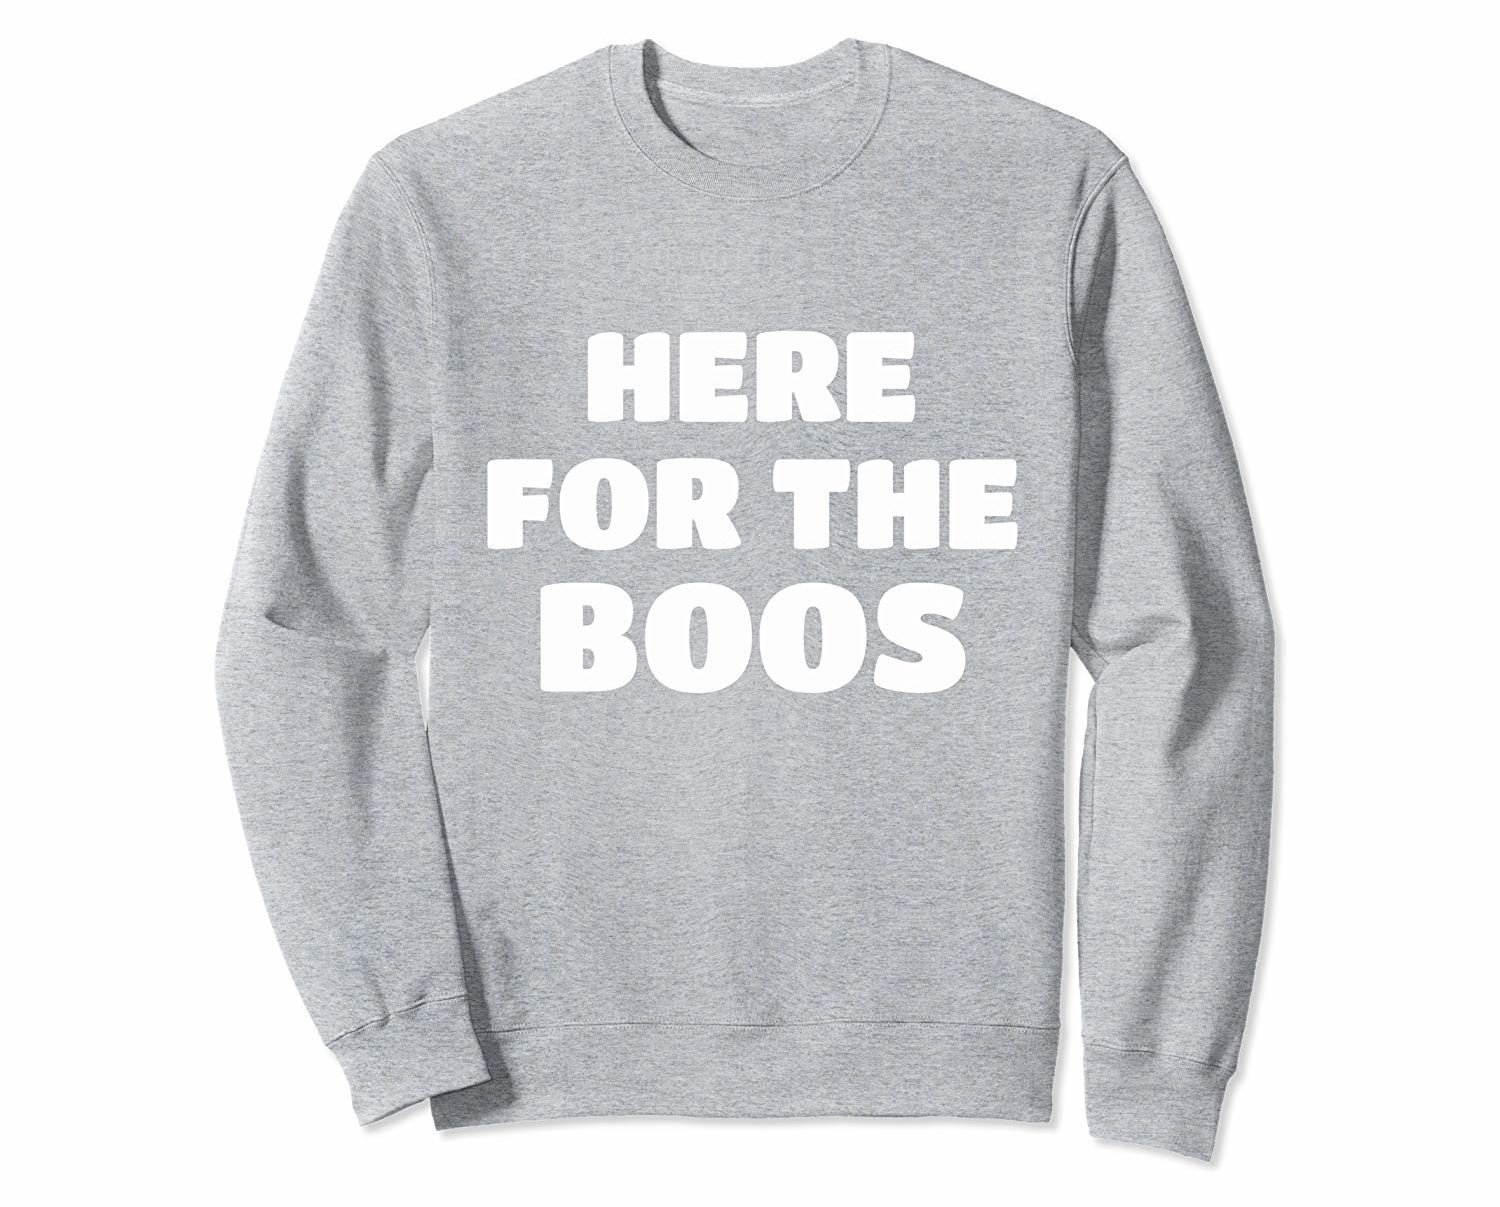 Funny Halloween Shirts 2022: Here For the Boos Sweatshirt 2022